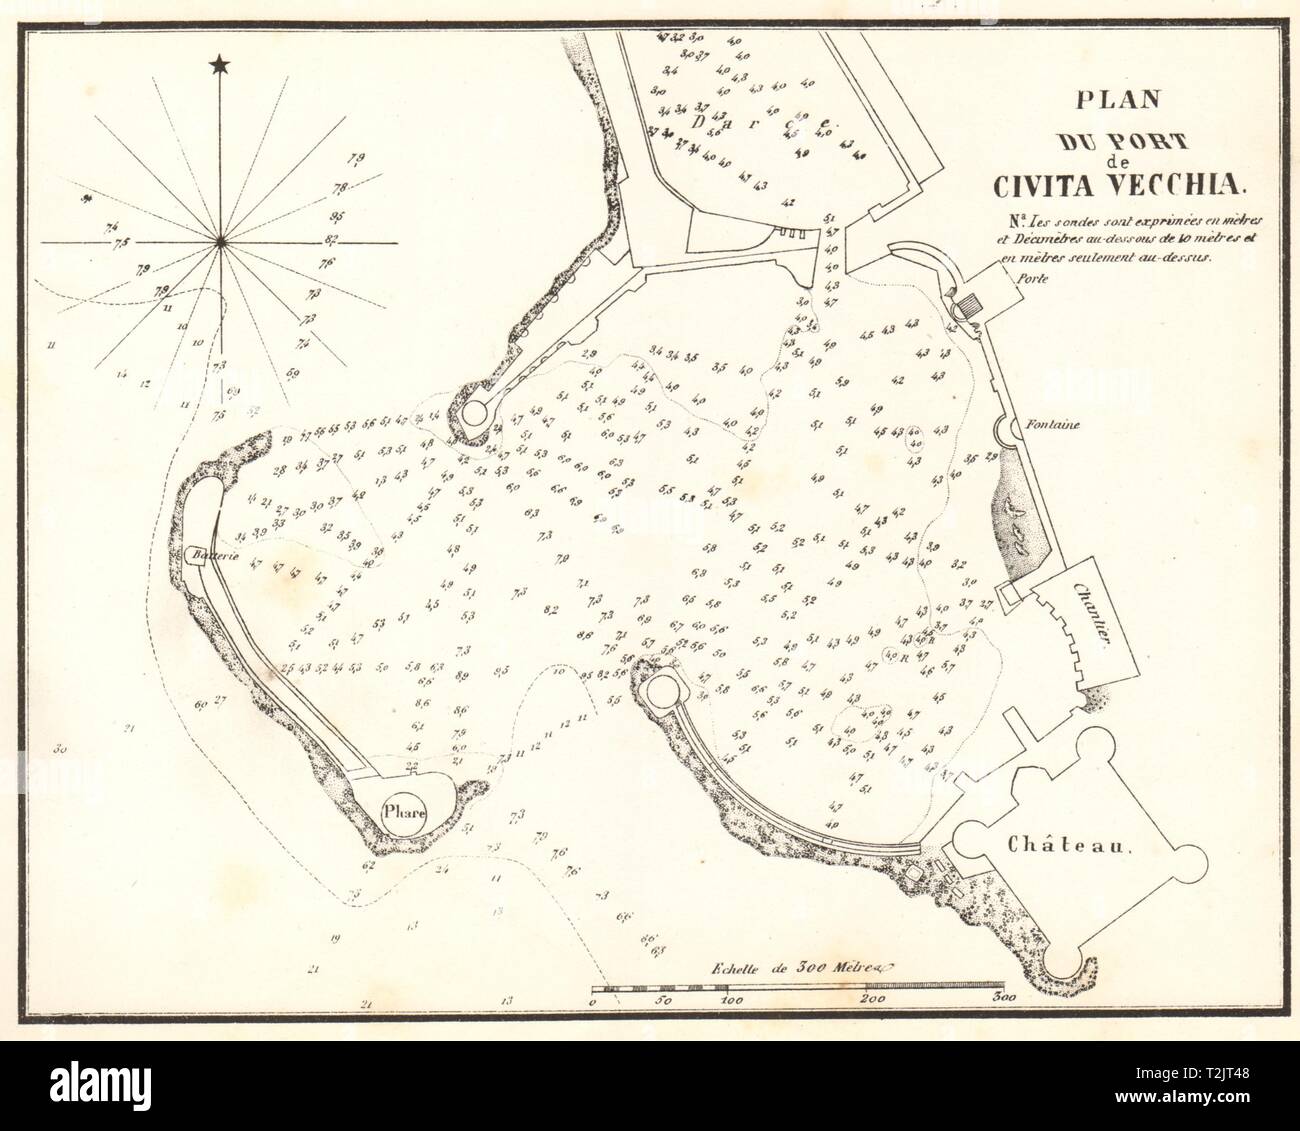 Civitavecchia. 'Plan du Port de Civita Vecchia'. Italy. GAUTTIER 1851 old map Stock Photo